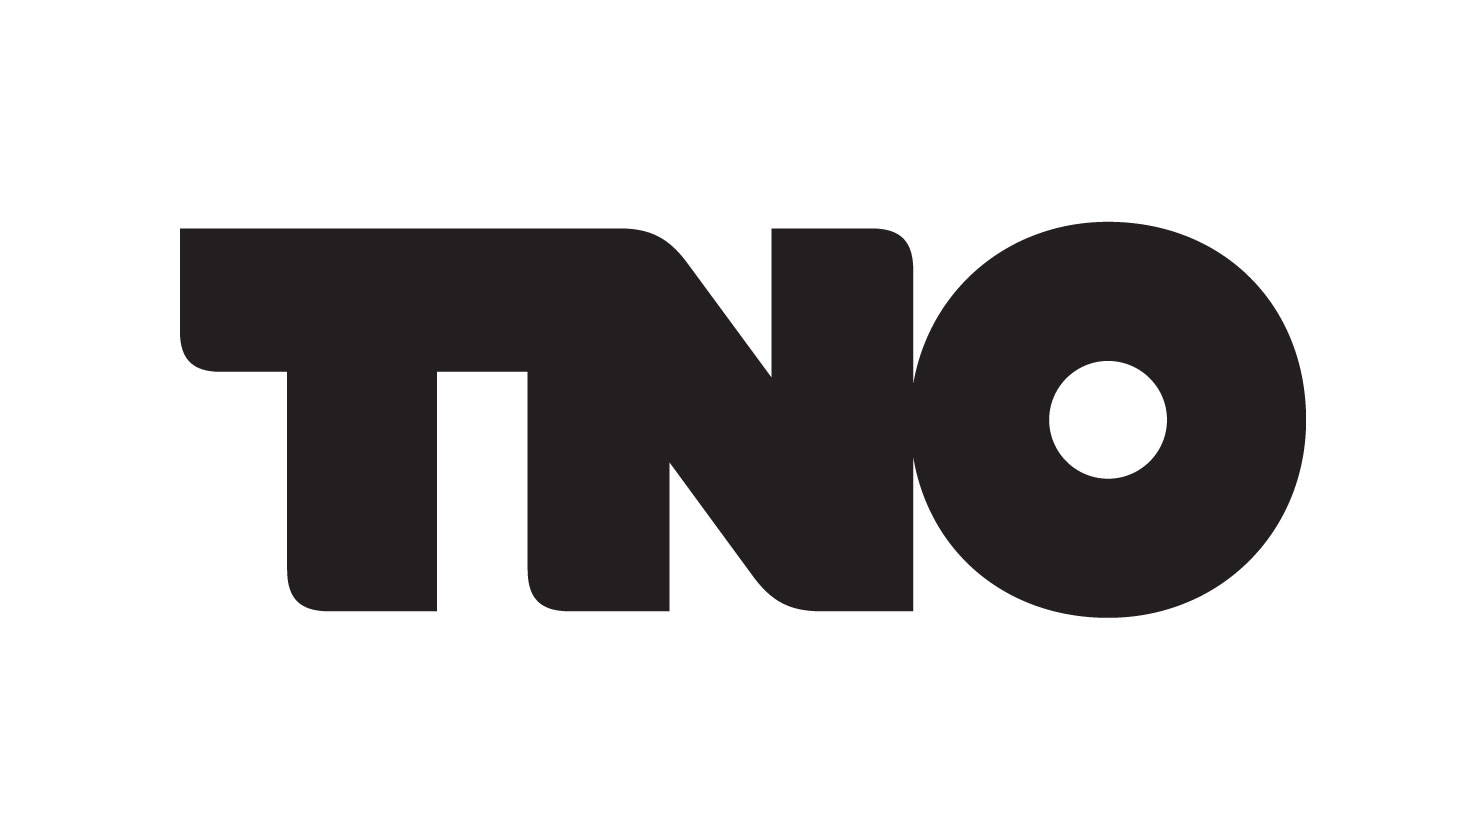 The TNO logo, a protected trademark